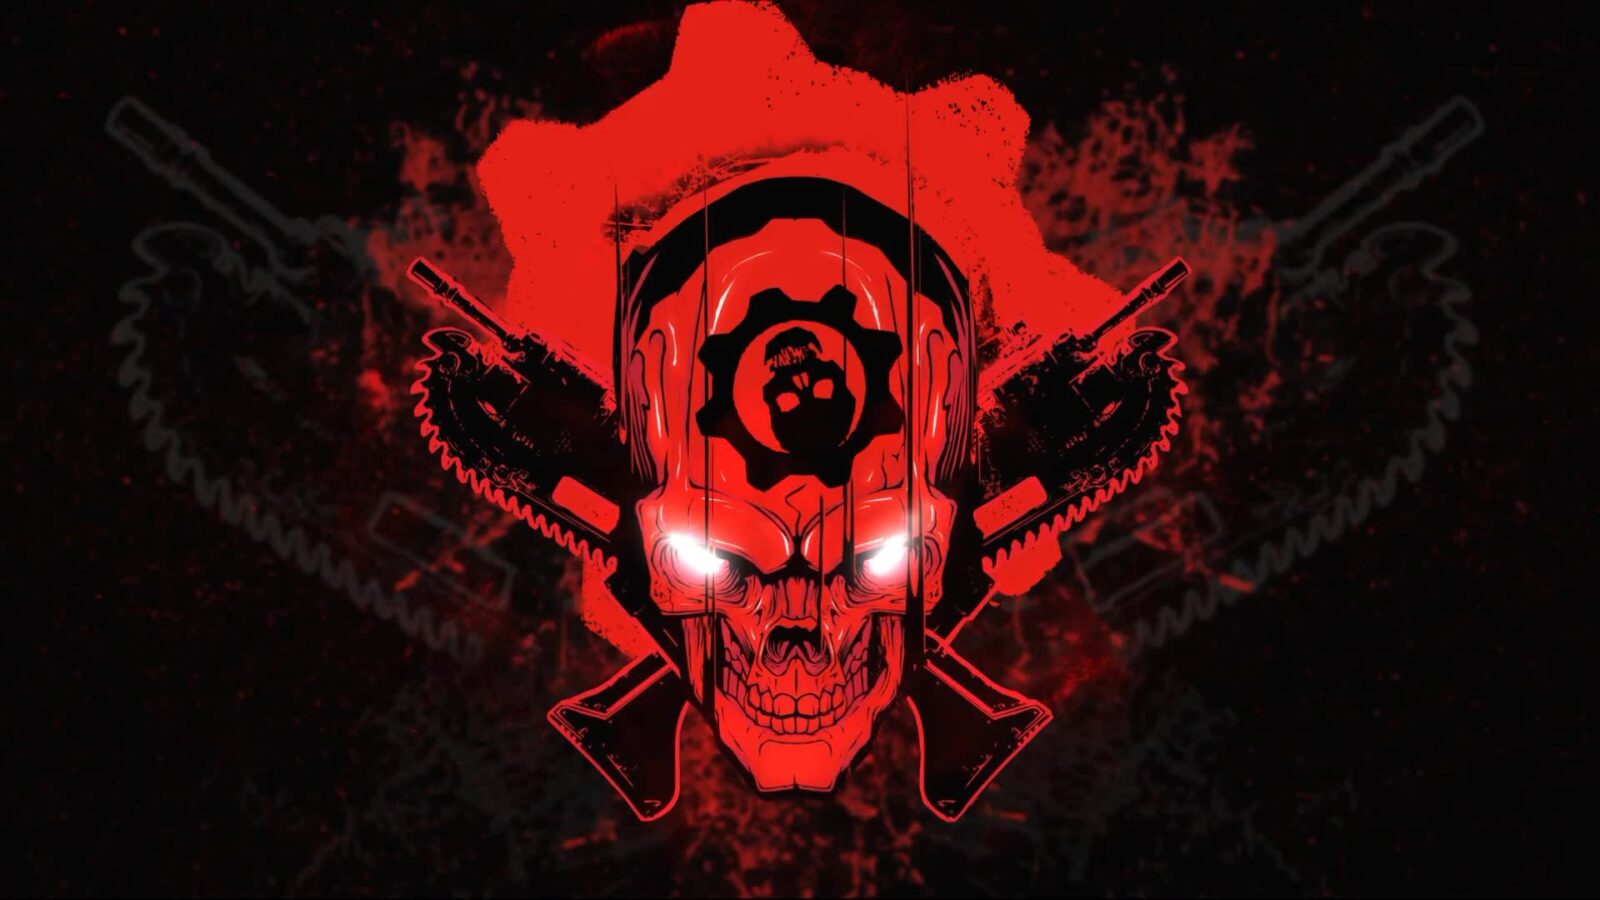 Gears Of War Red Skull - Game Live Wallpaper - Live Desktop Wallpapers